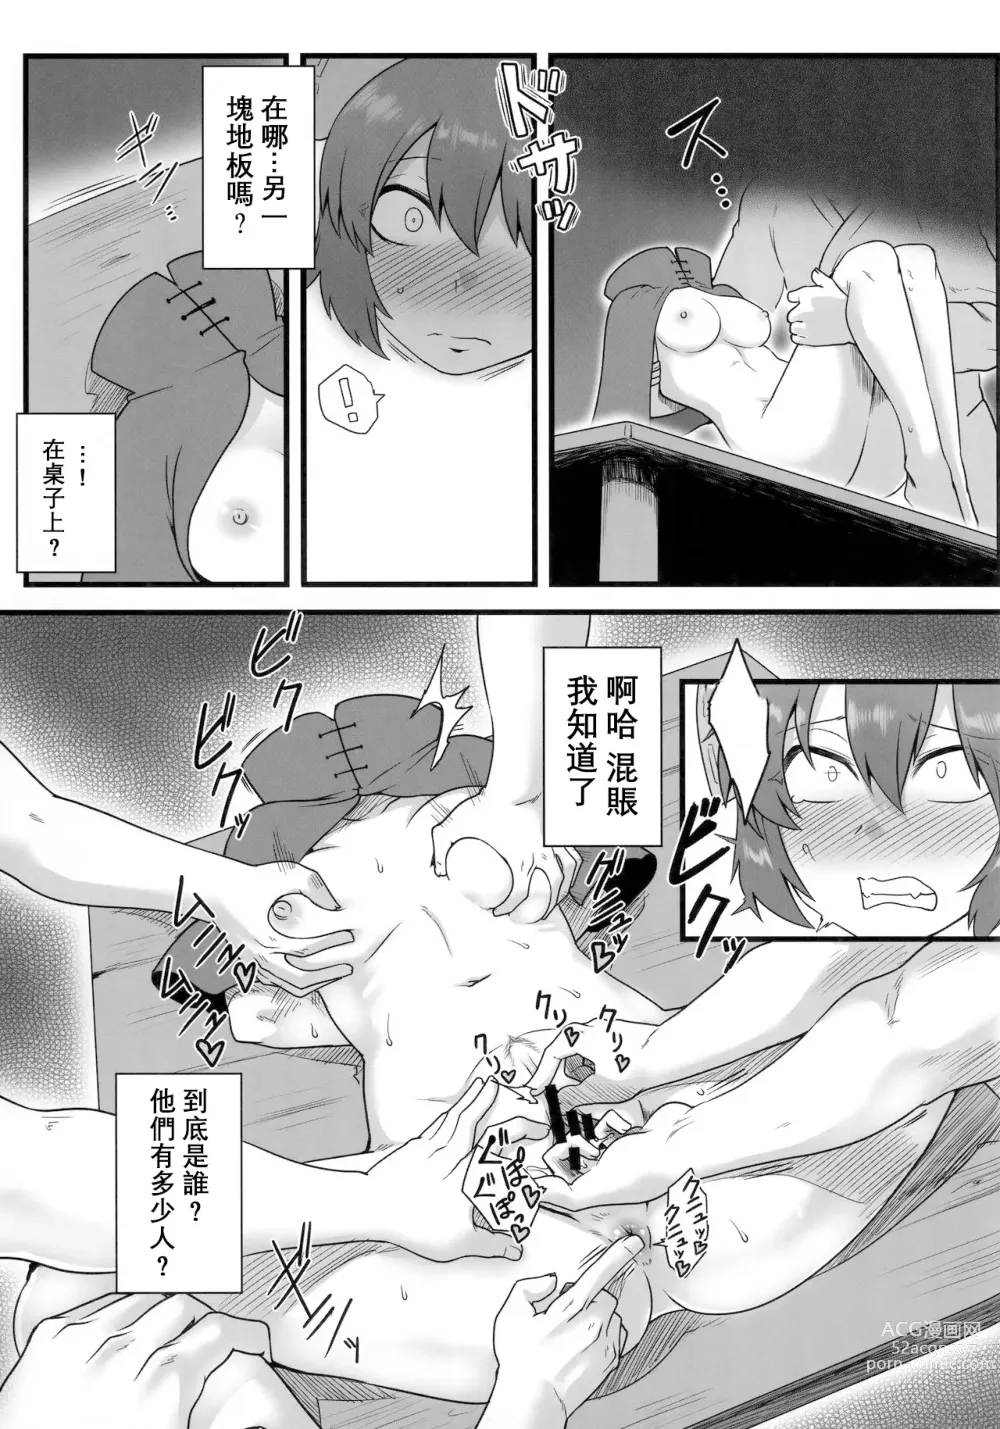 Page 7 of doujinshi 泄器蛮奇